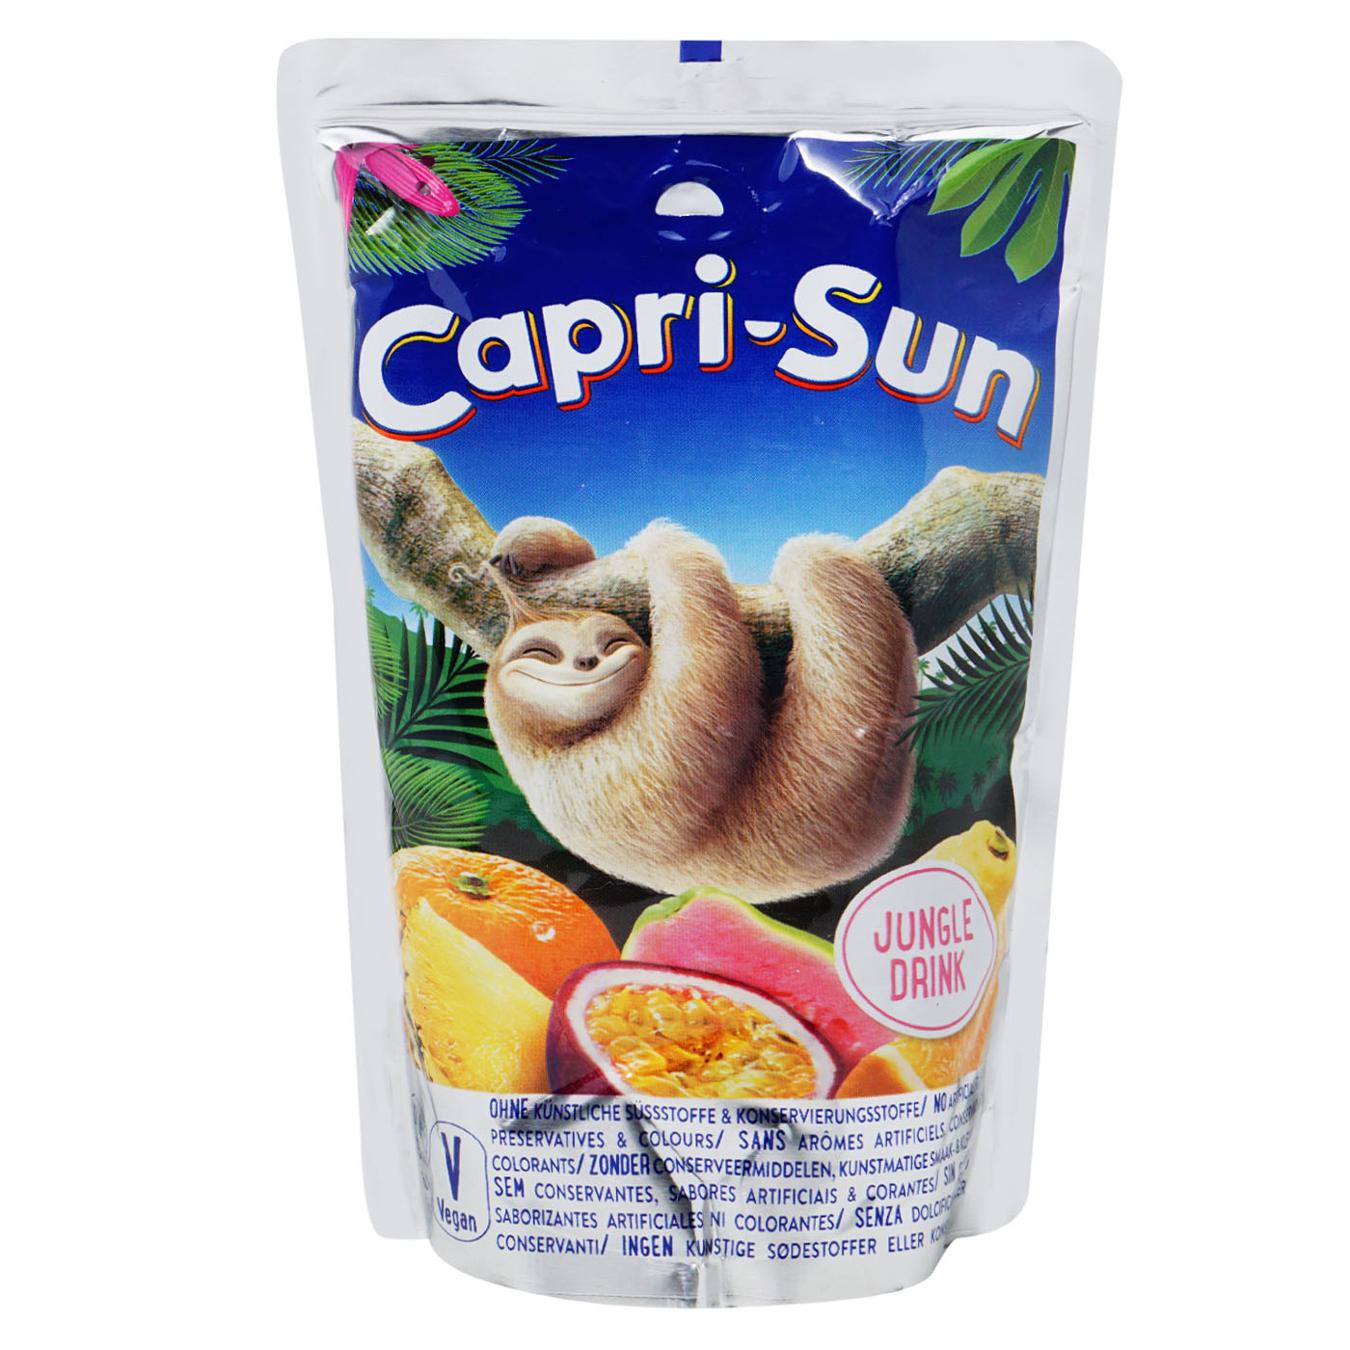 Capri Sun Jungle Drink juice-based drink 0.2 l doi-pak